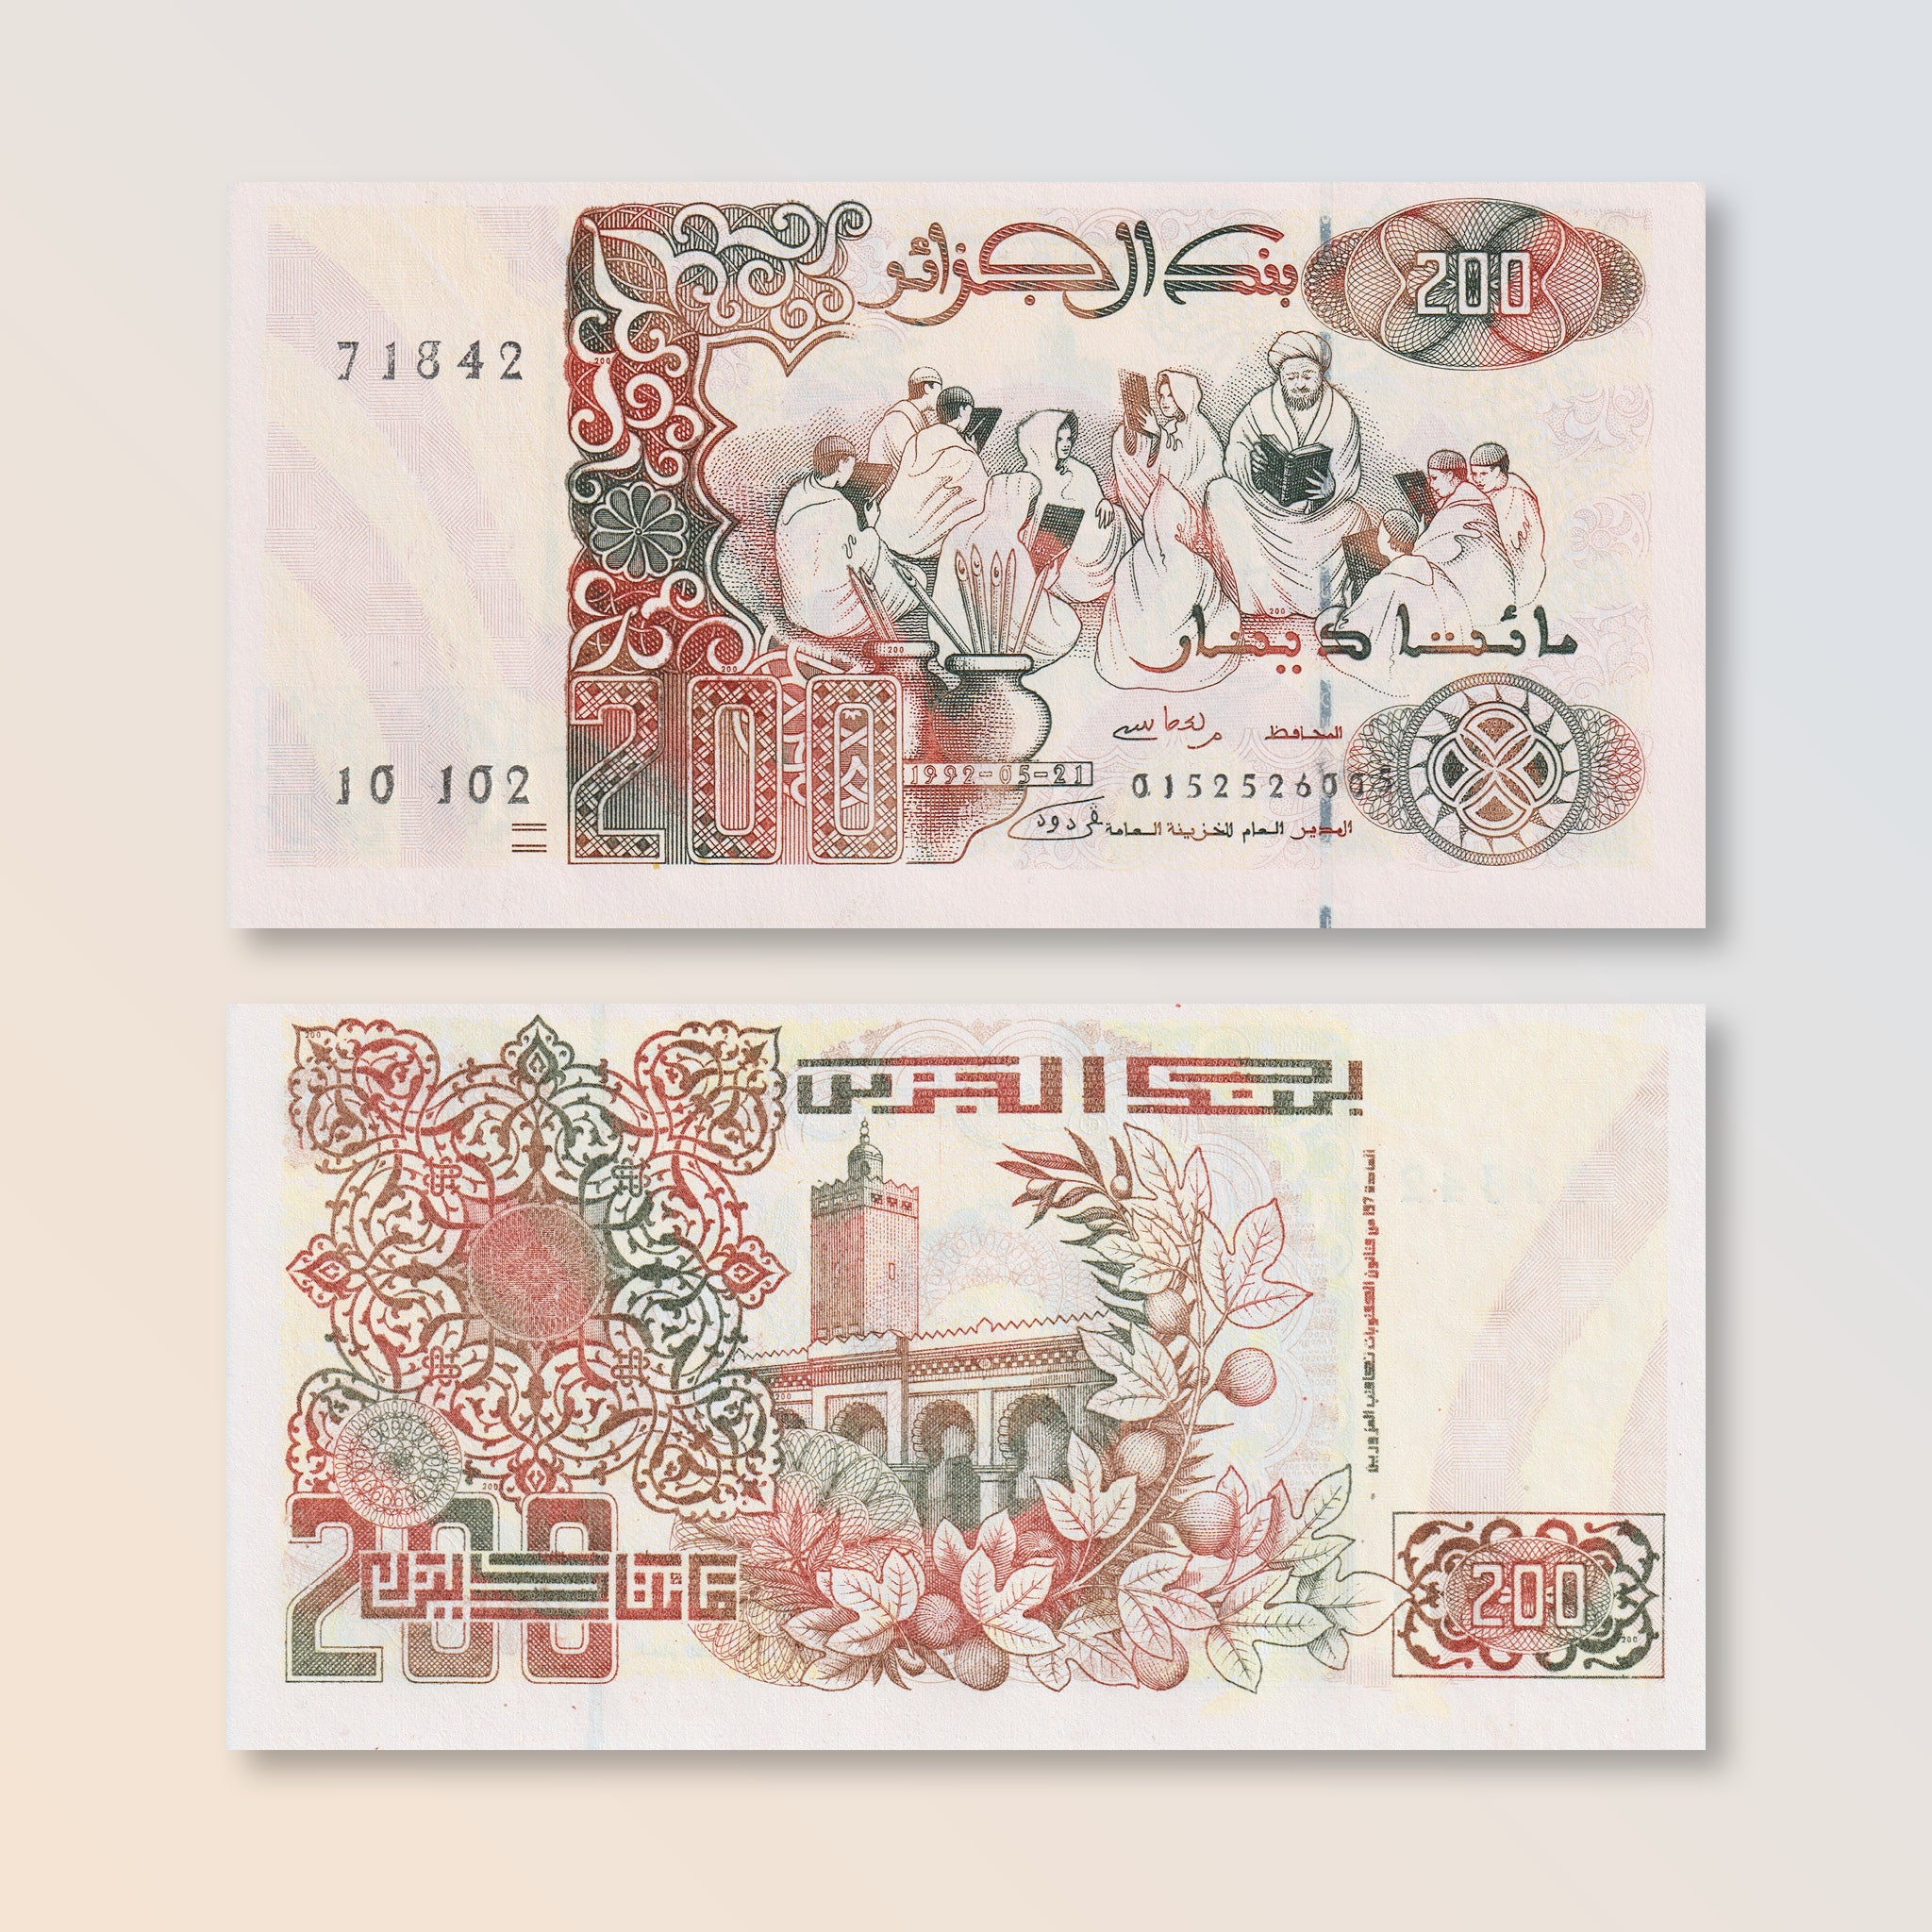 Algeria 200 Dinars, 1992, B402a, P138, UNC - Robert's World Money - World Banknotes